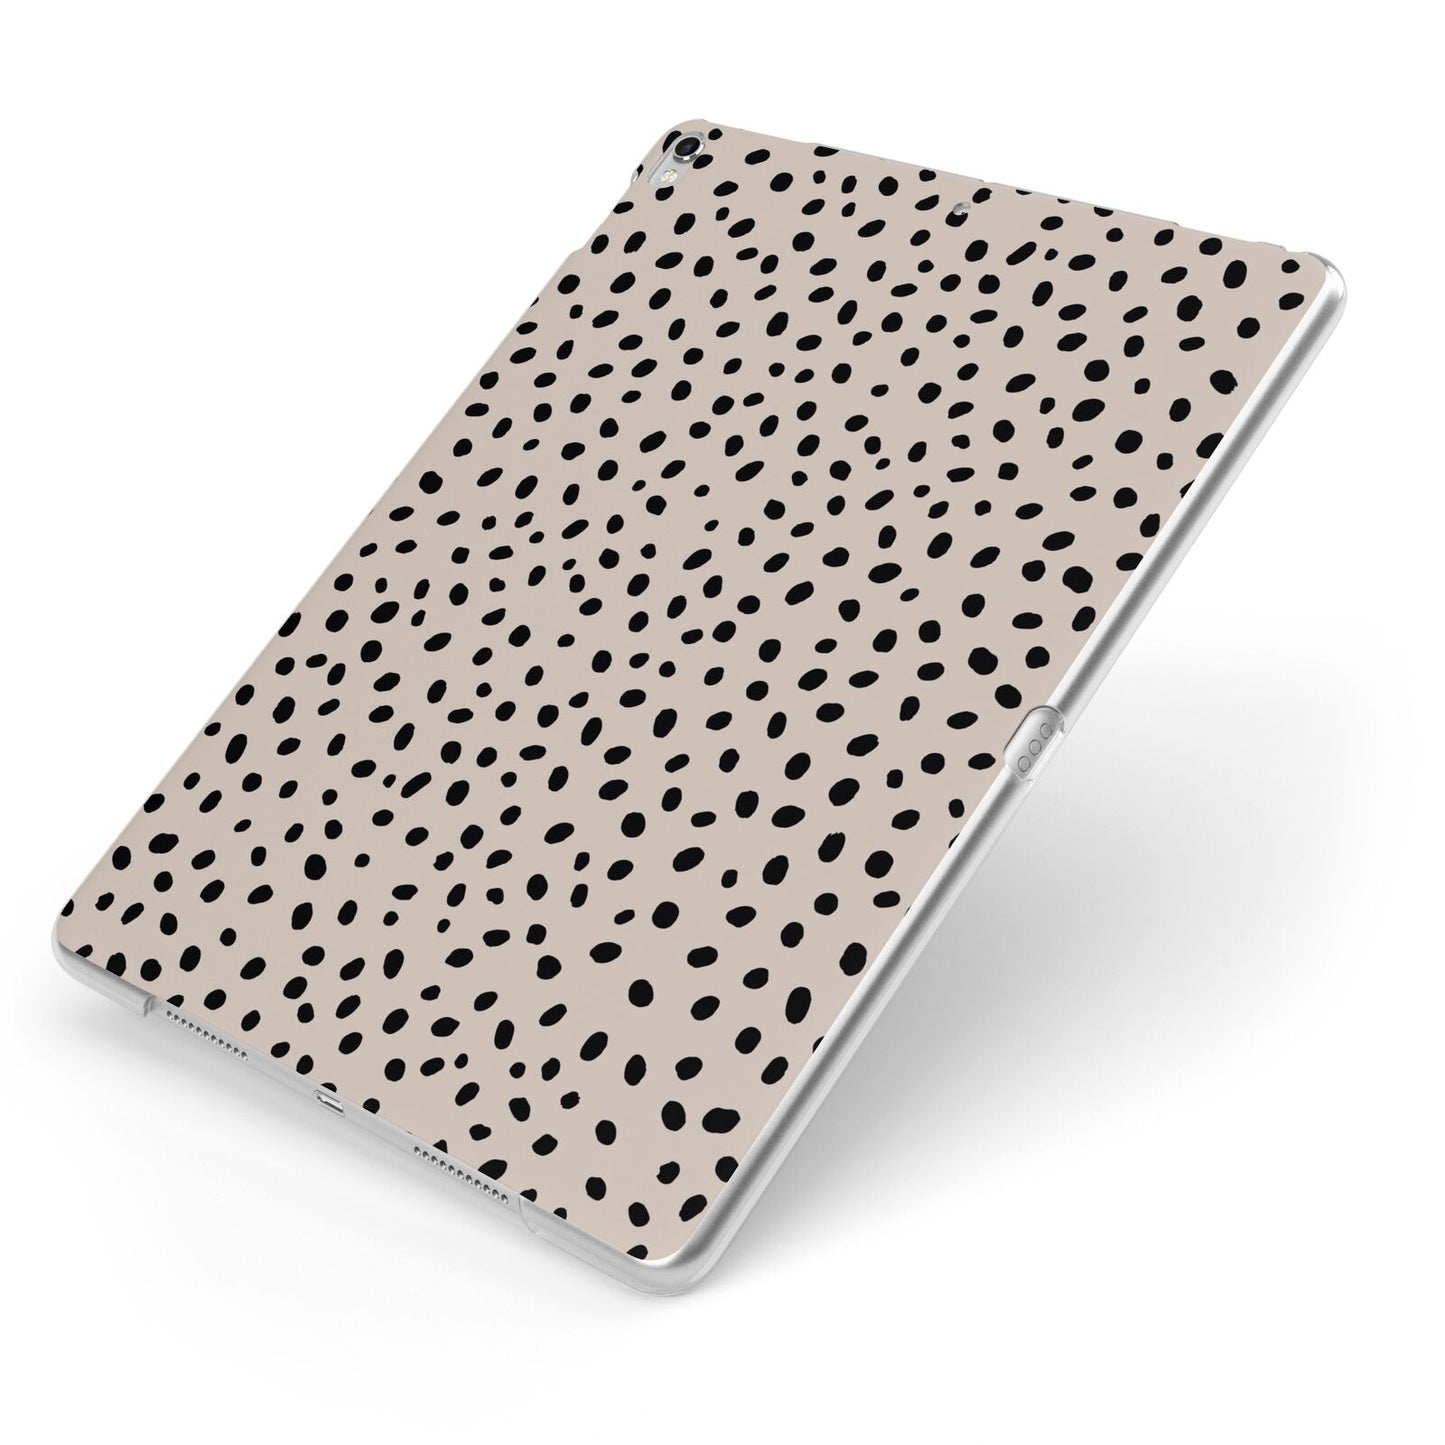 Almond Polka Dot Apple iPad Case on Silver iPad Side View